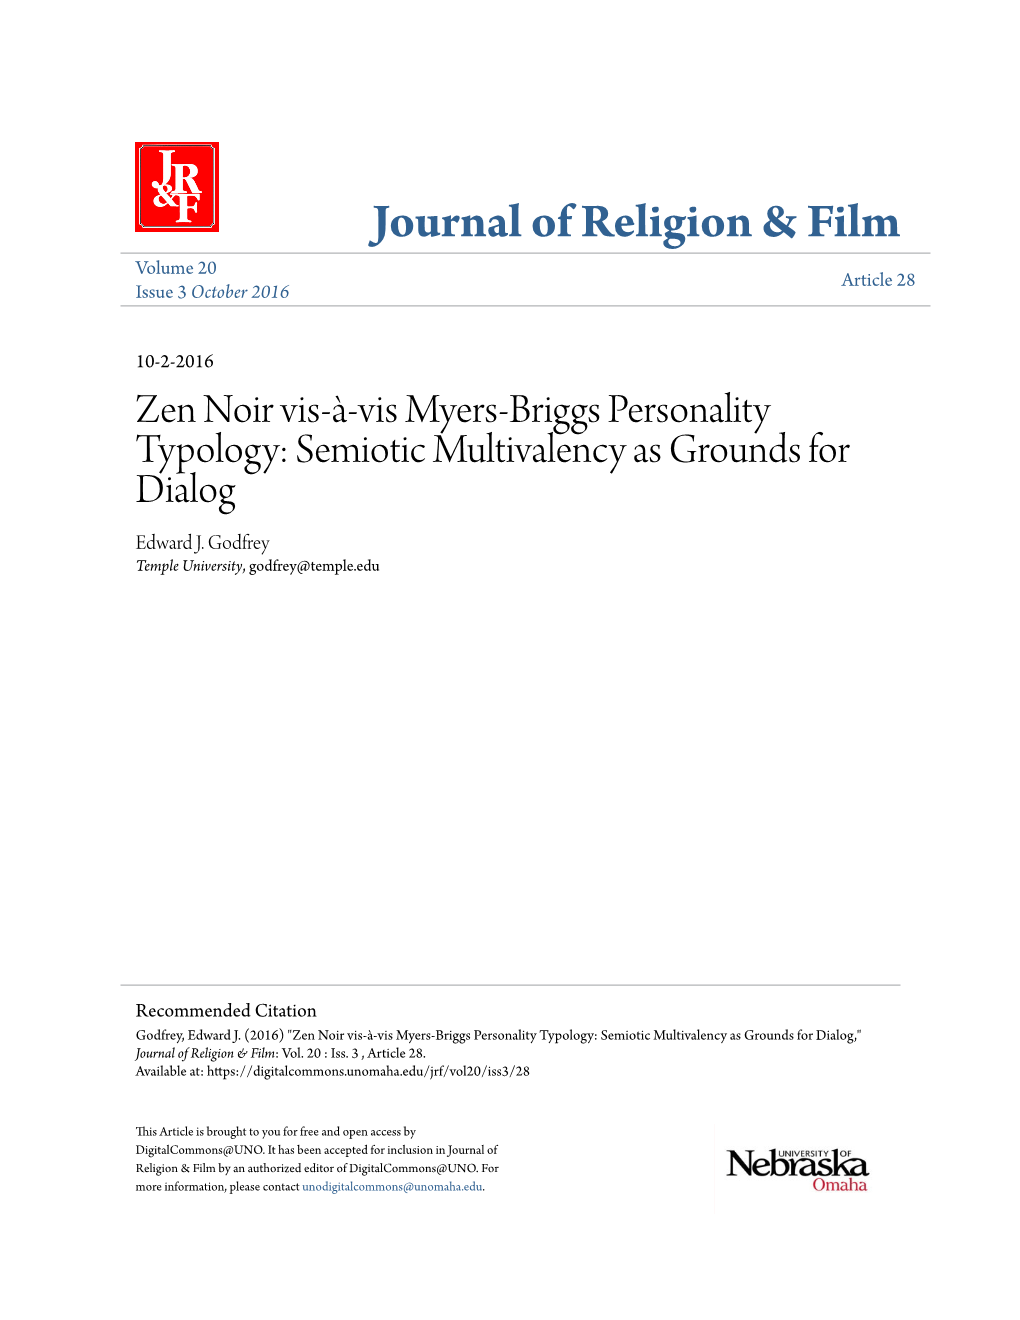 Zen Noir Vis-À-Vis Myers-Briggs Personality Typology: Semiotic Multivalency As Grounds for Dialog Edward J